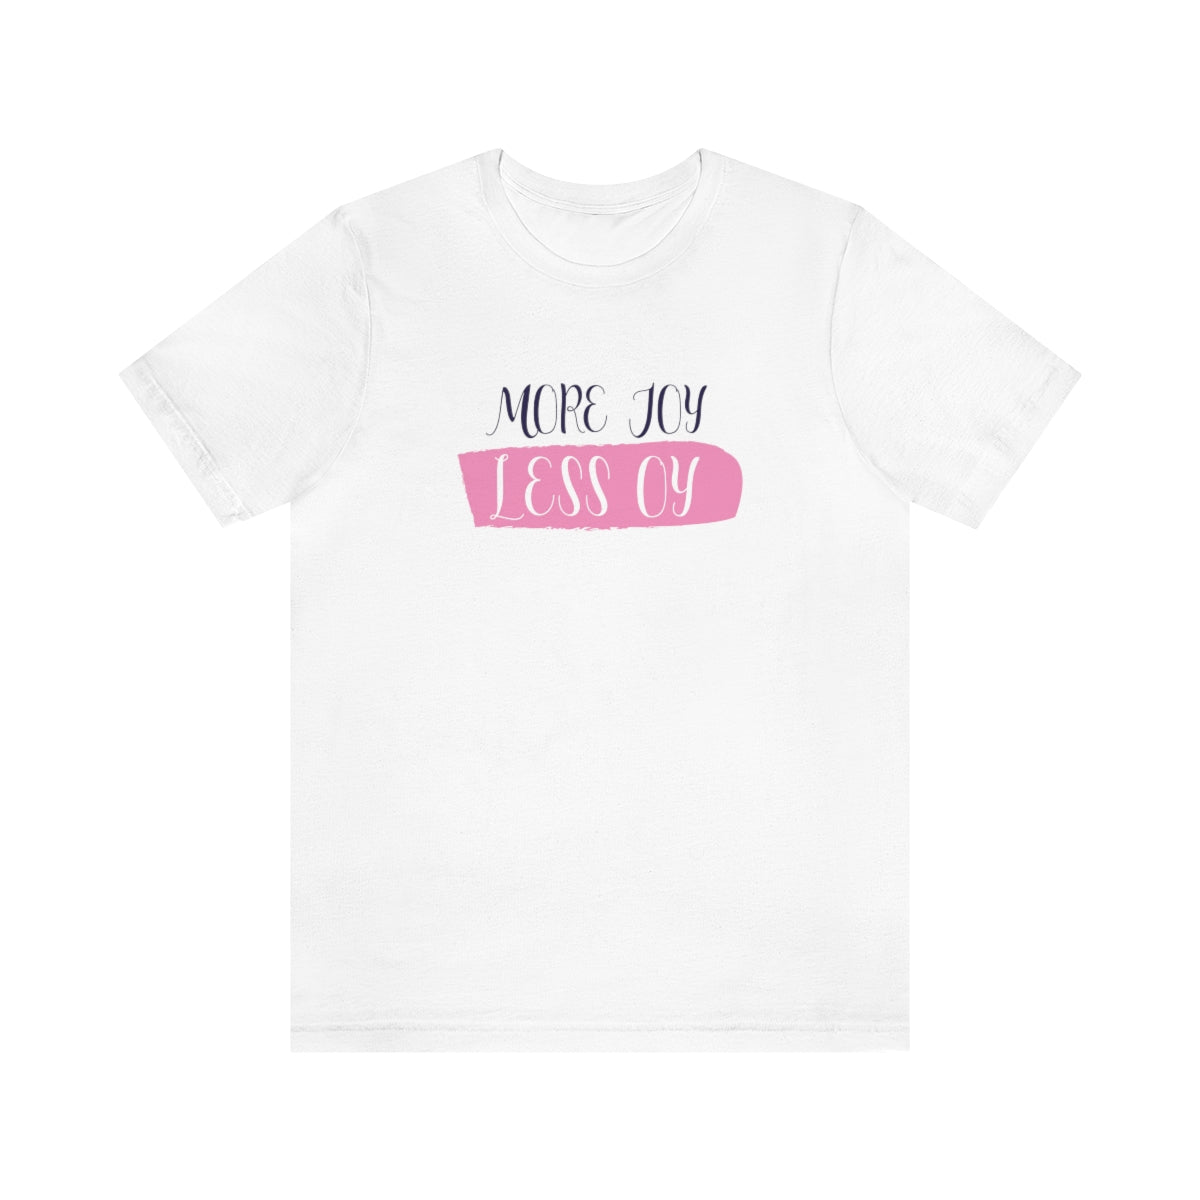 More Joy Less Oy T-Shirt